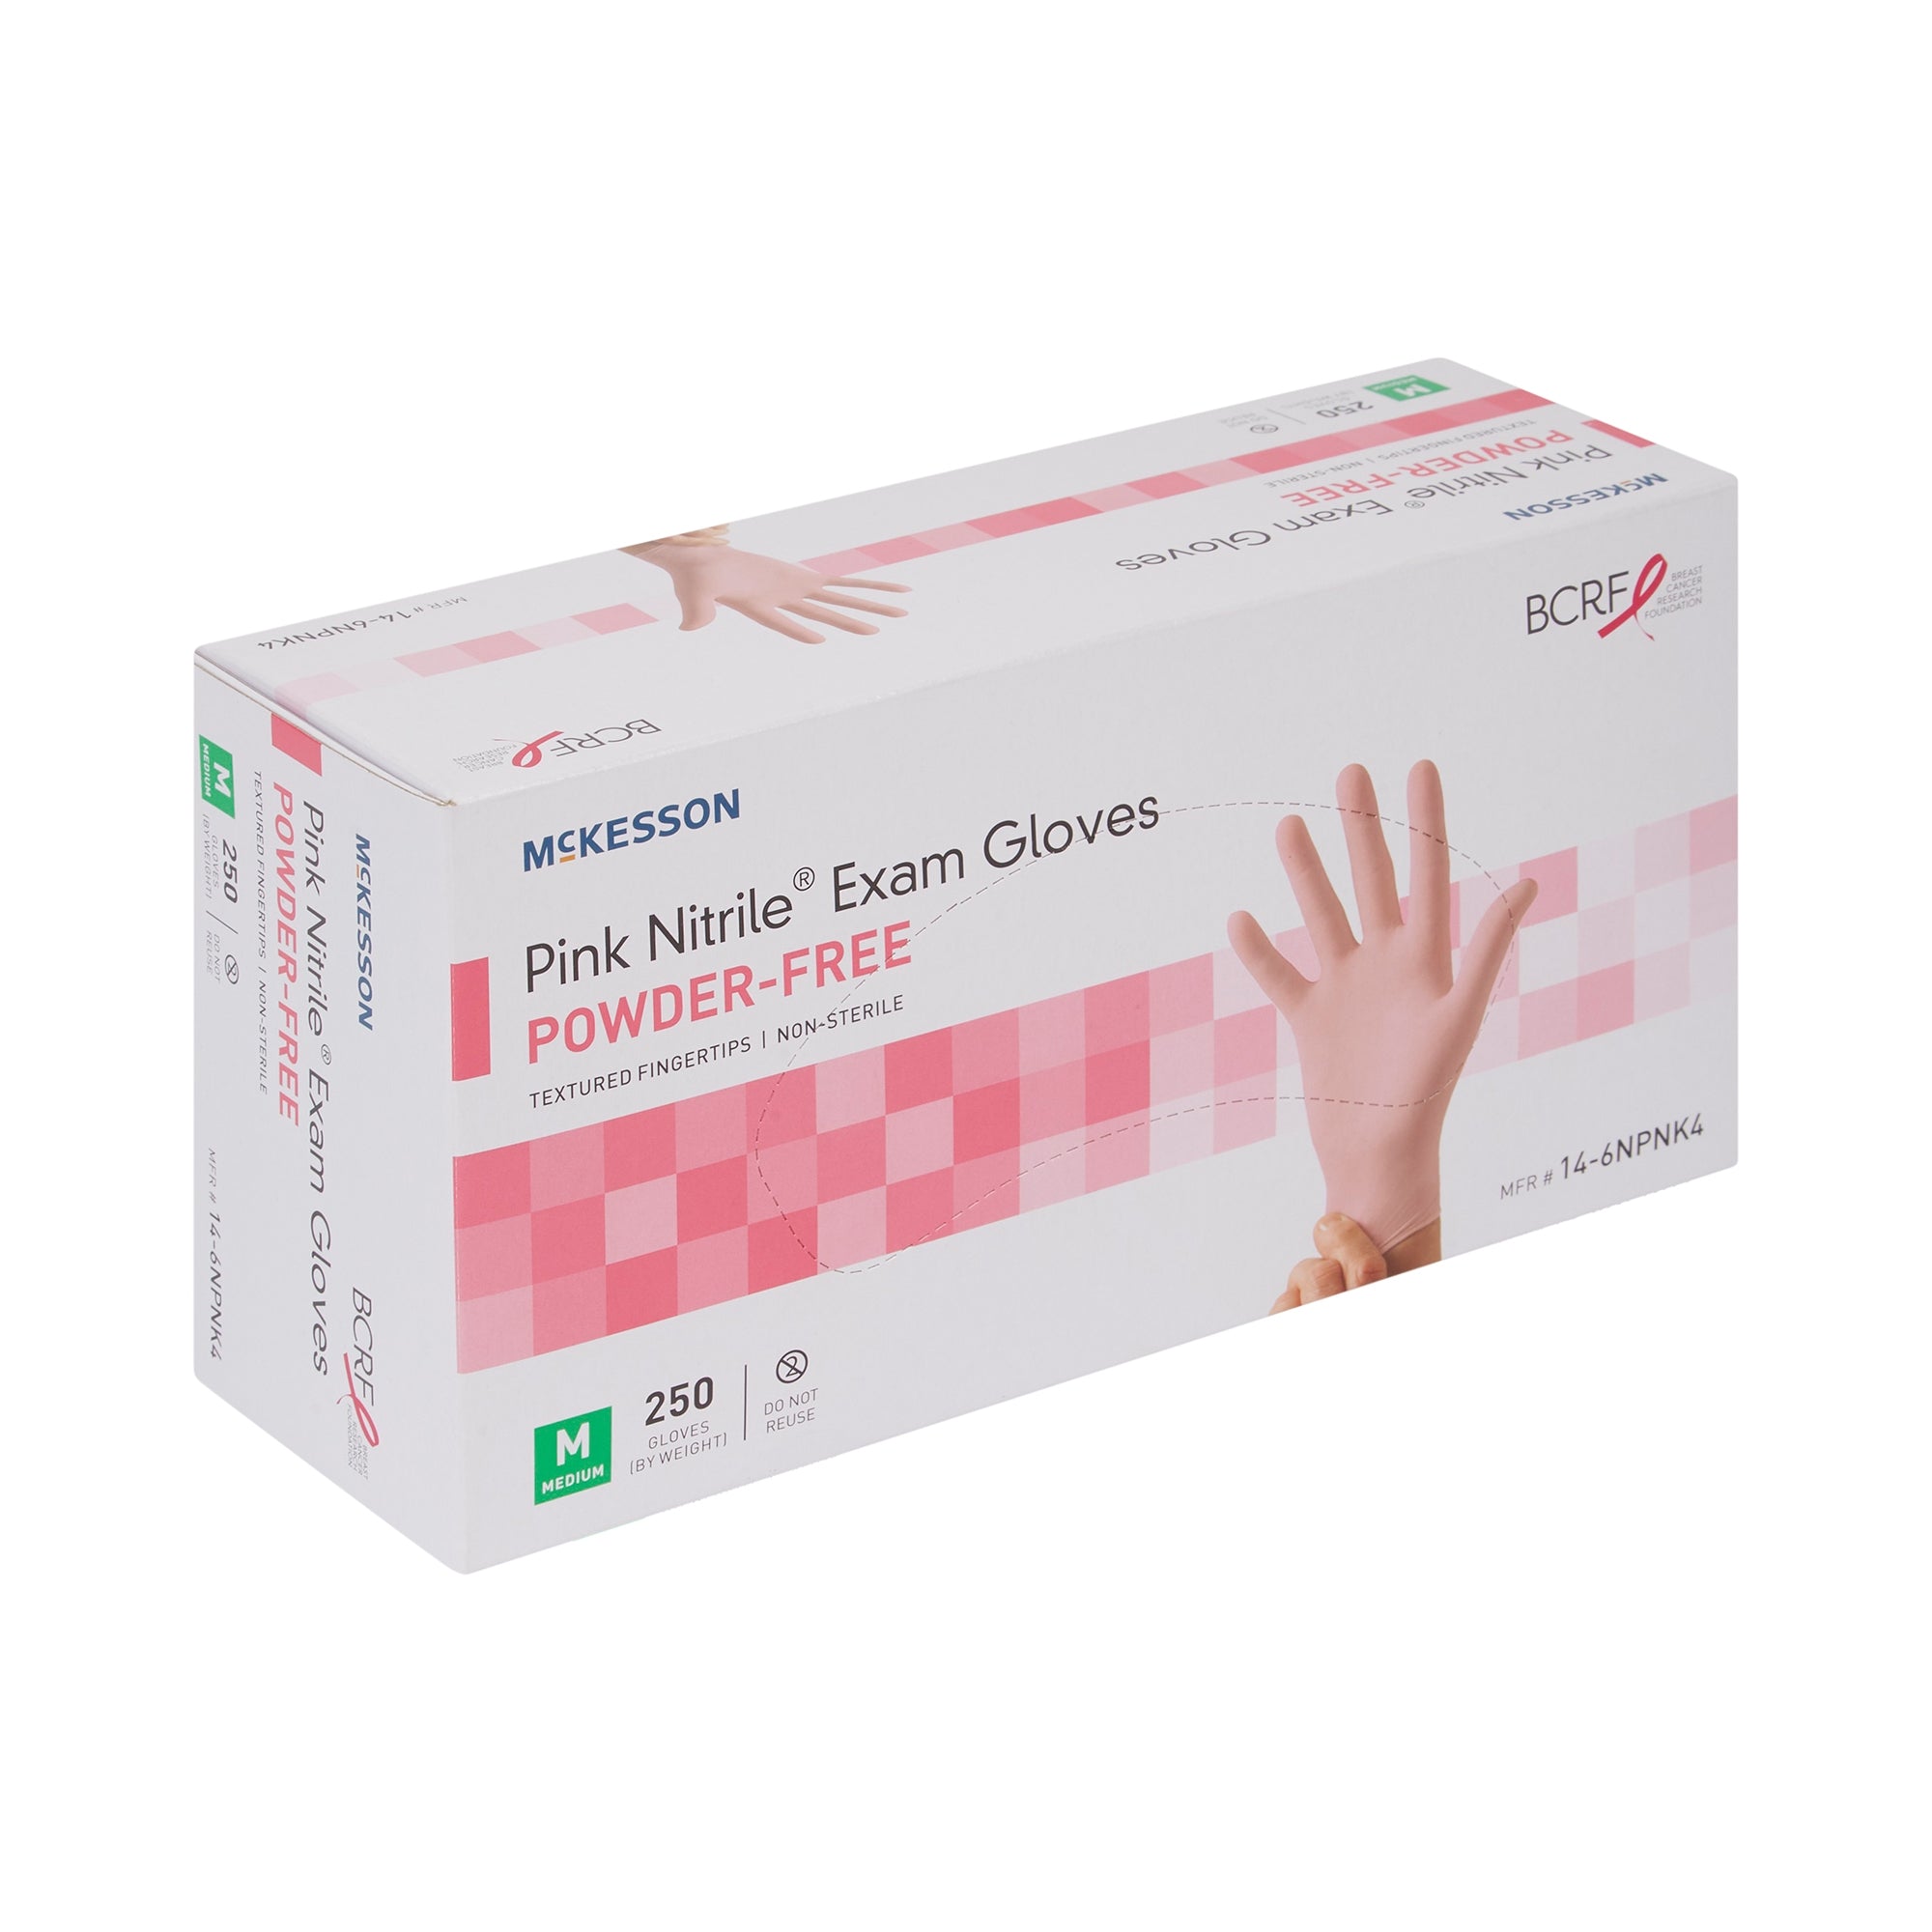 McKesson Pink Nitrile Exam Gloves, Medium - Support Breast Cancer Research